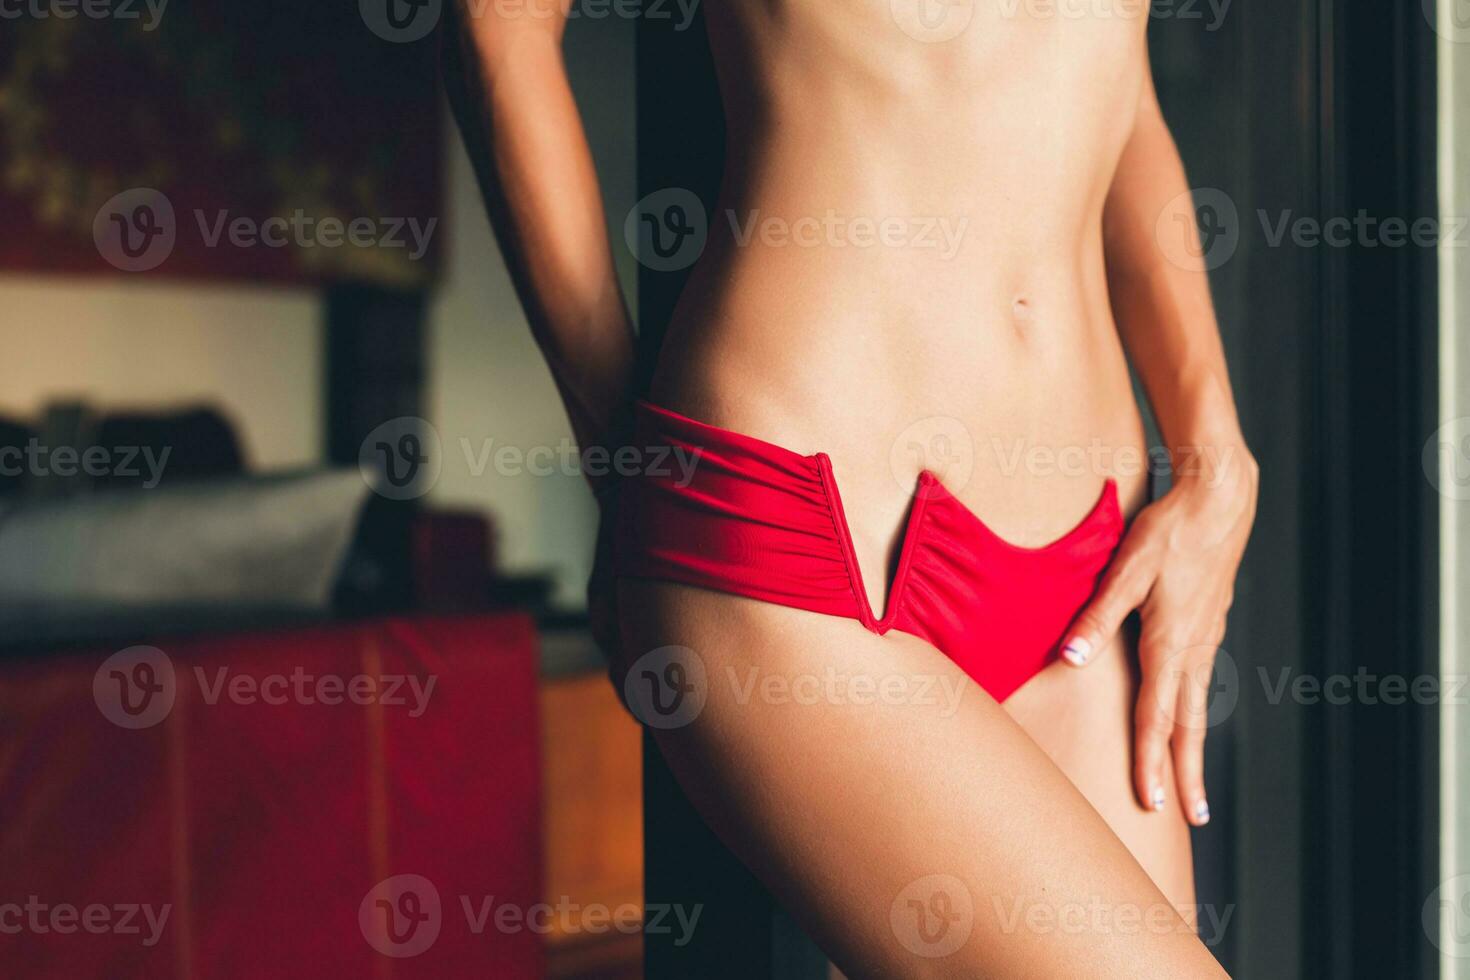 jong vrouw met mooi slank lichaam vervelend rood bikini zwempak foto